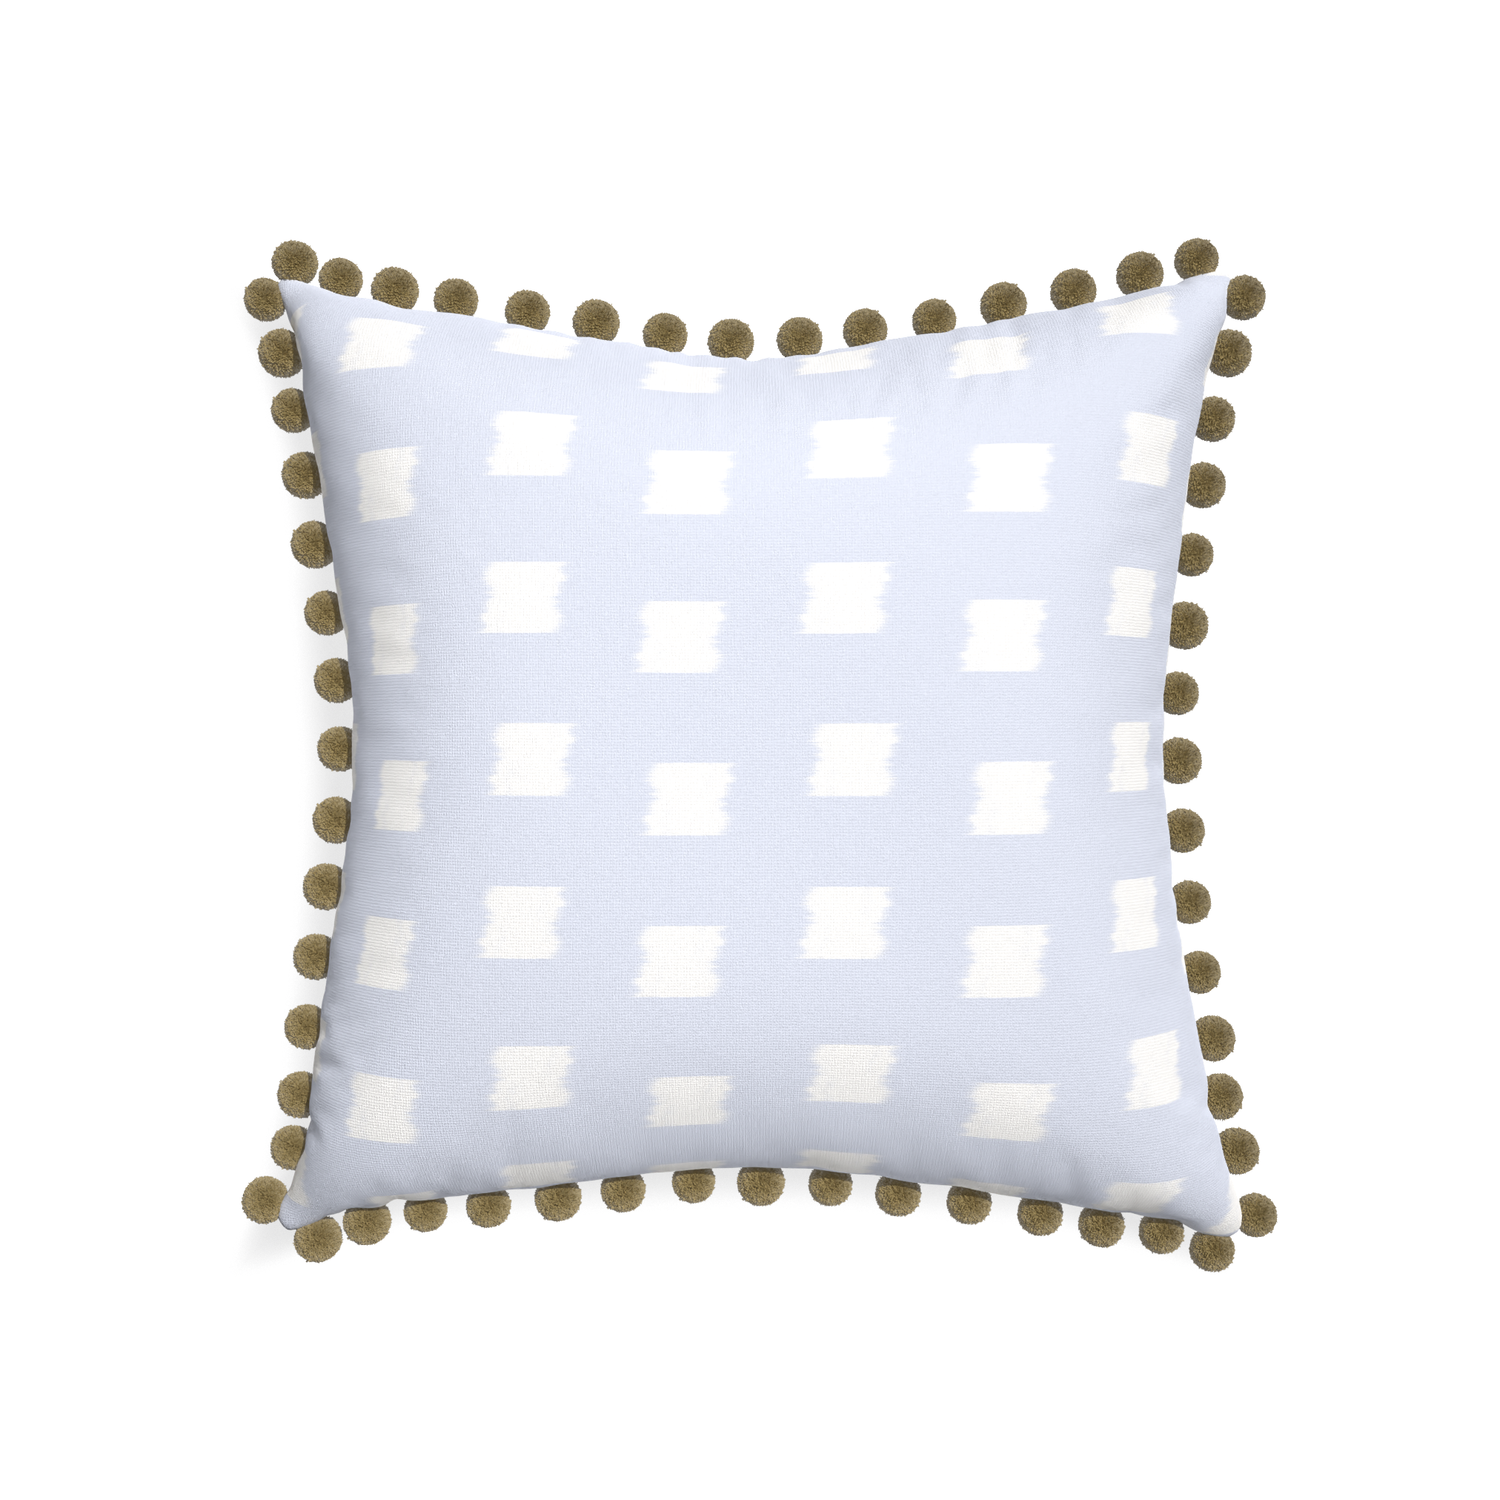 22-square denton custom sky blue patternpillow with olive pom pom on white background